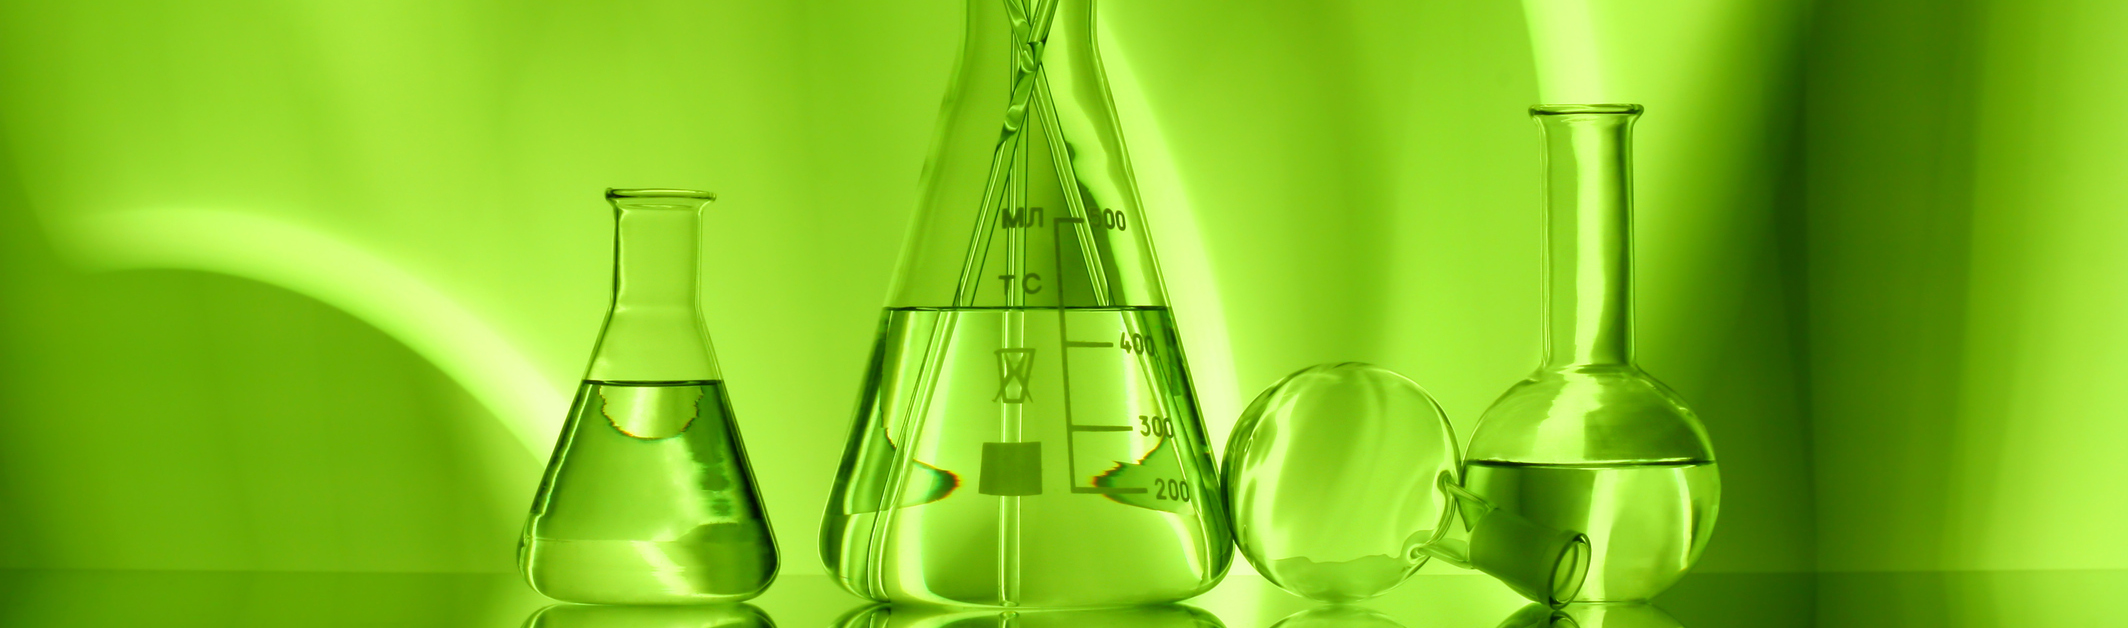 Medicinal chemistry - Green chemistry